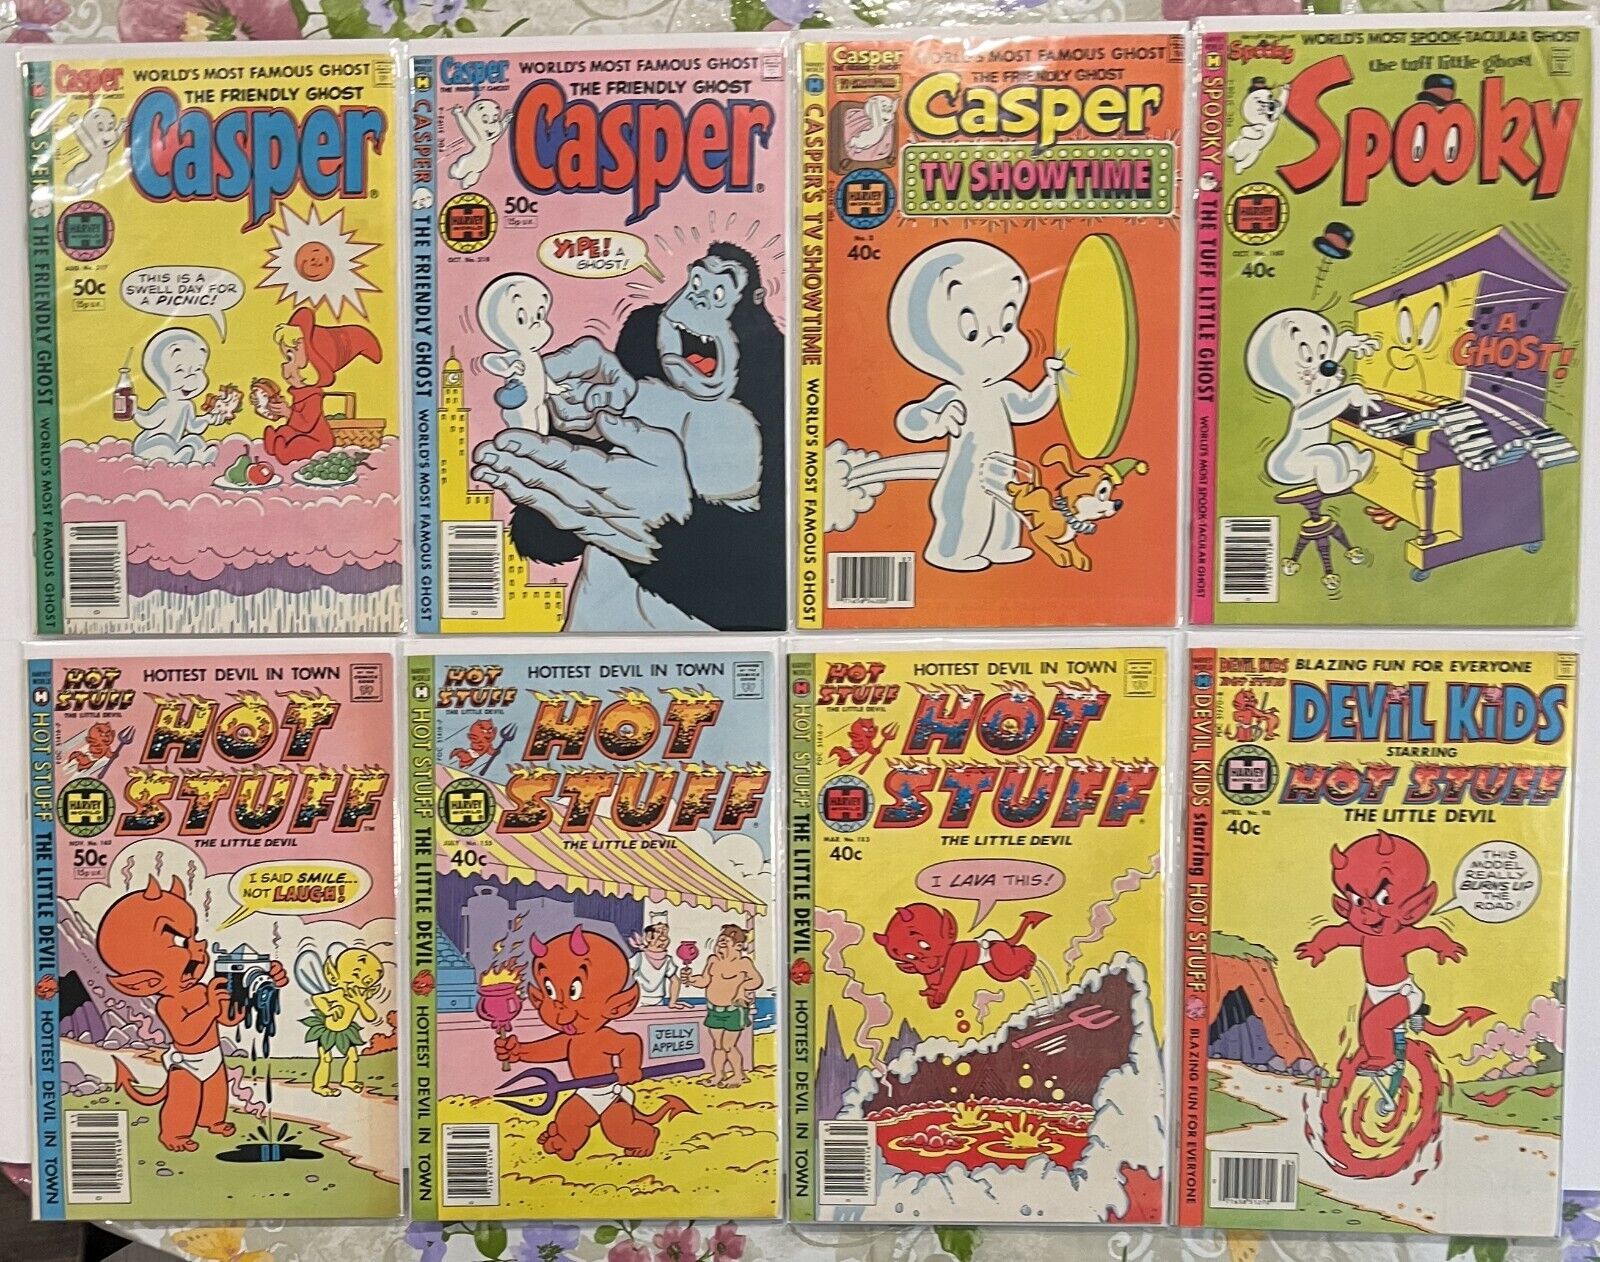 Lot of 10 Harvey World Comic Books - Casper, Hot Stuff, Spooky and Devil kids